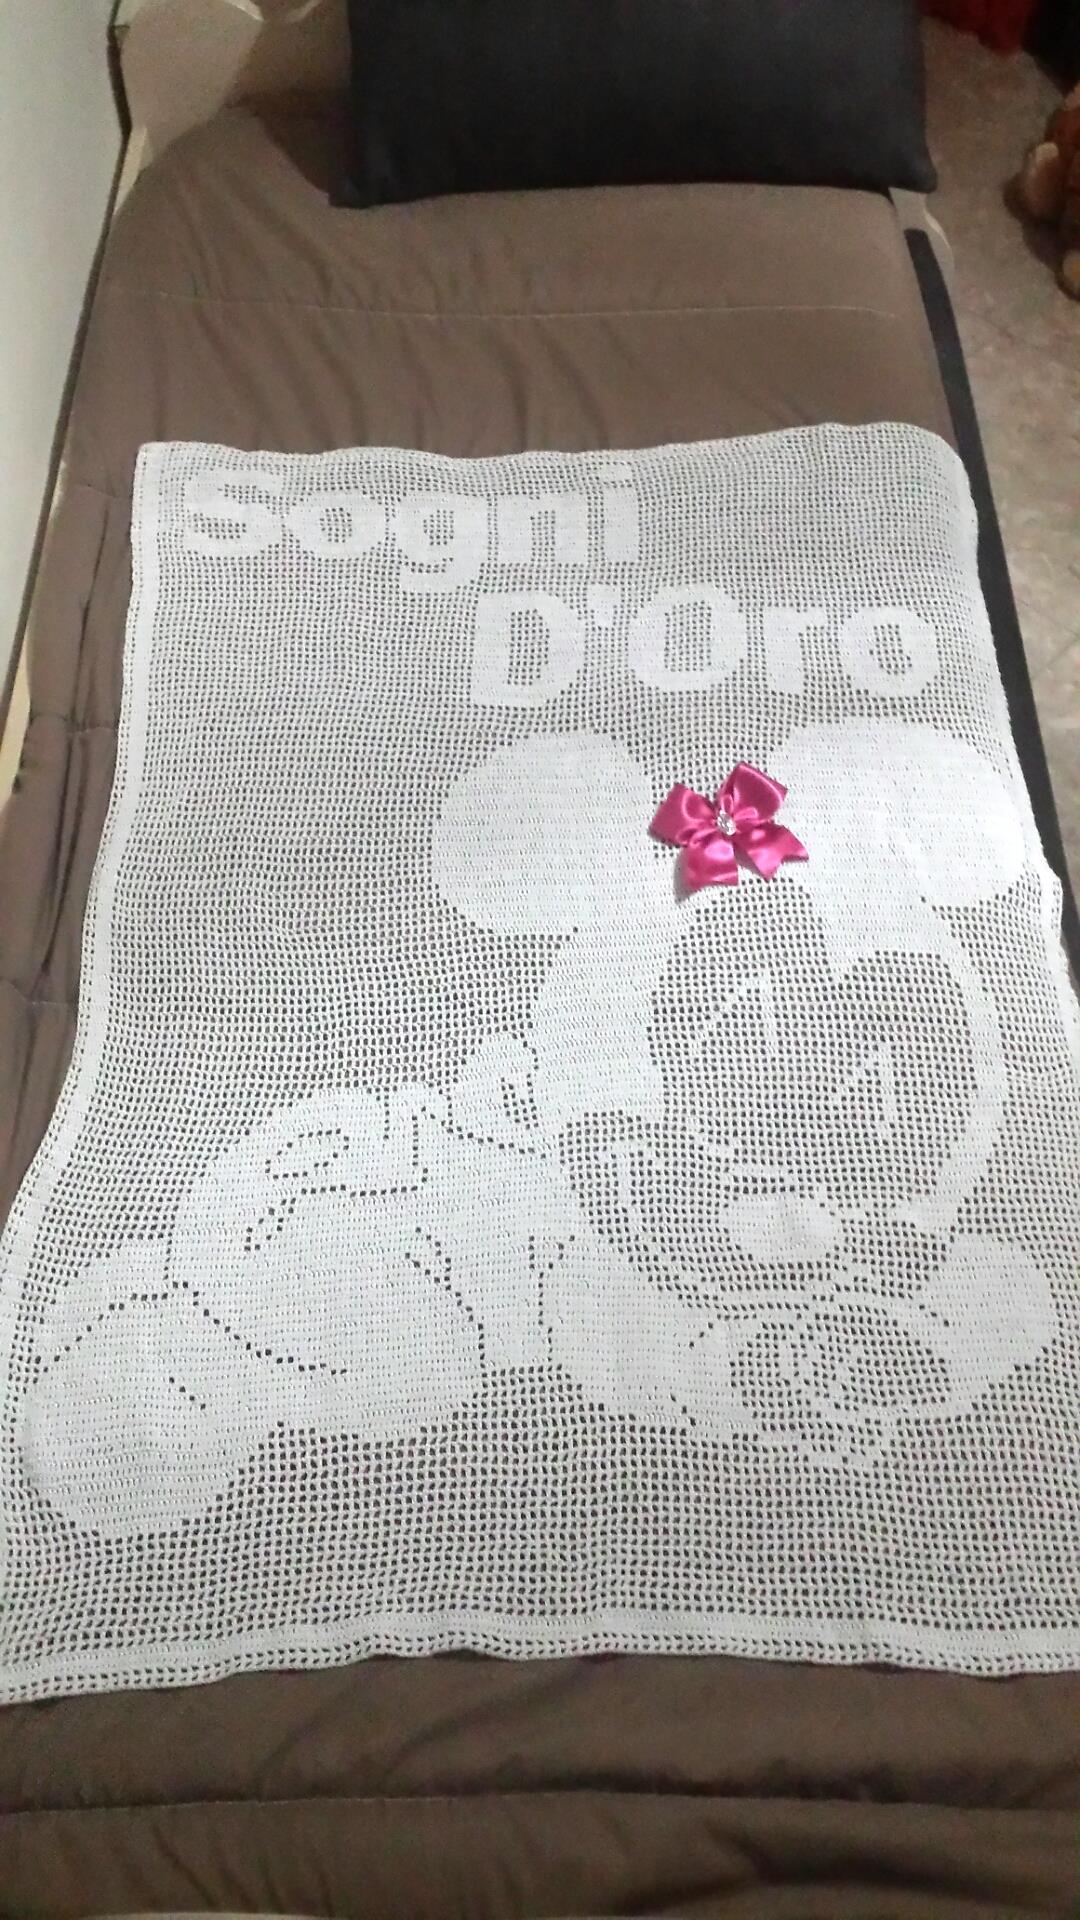 Copertina uncinetto filet con Disney Minnie autrice Fan su Facebook Brenda De Luca